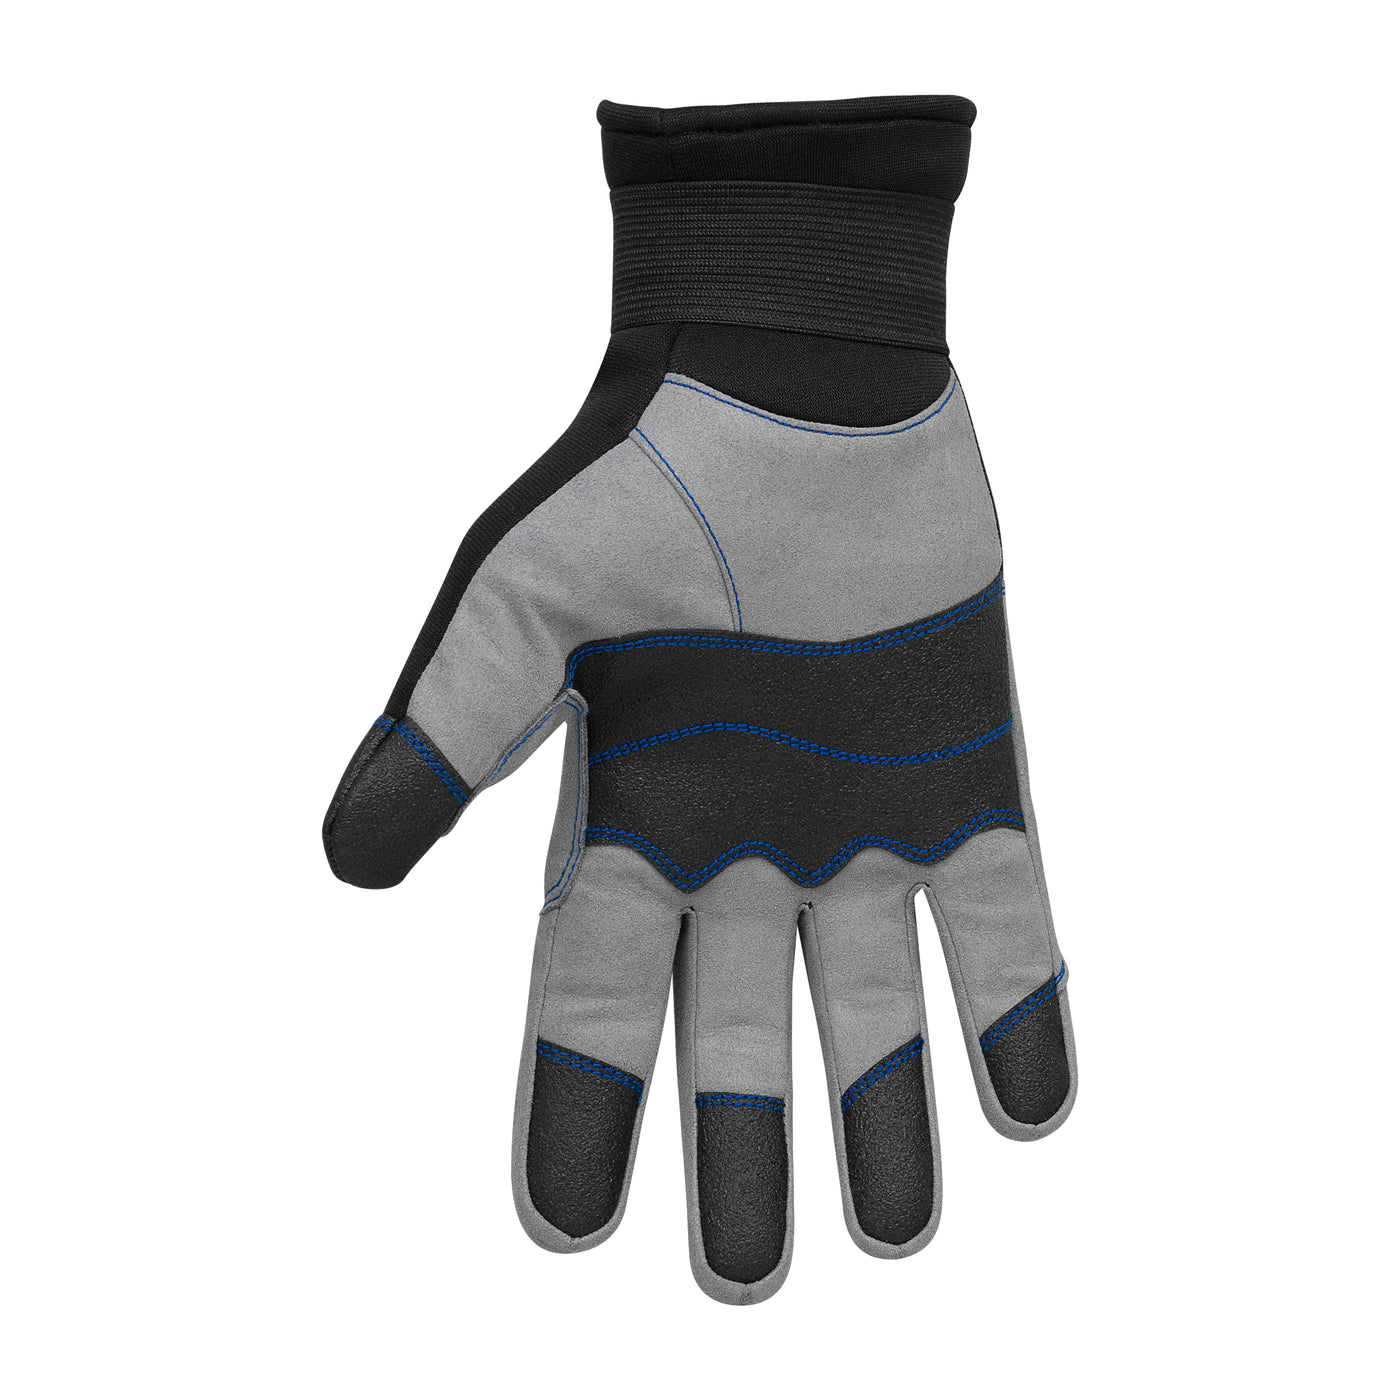 BTS DuraFlex 1.5mm Glove Palm view Fingers Open